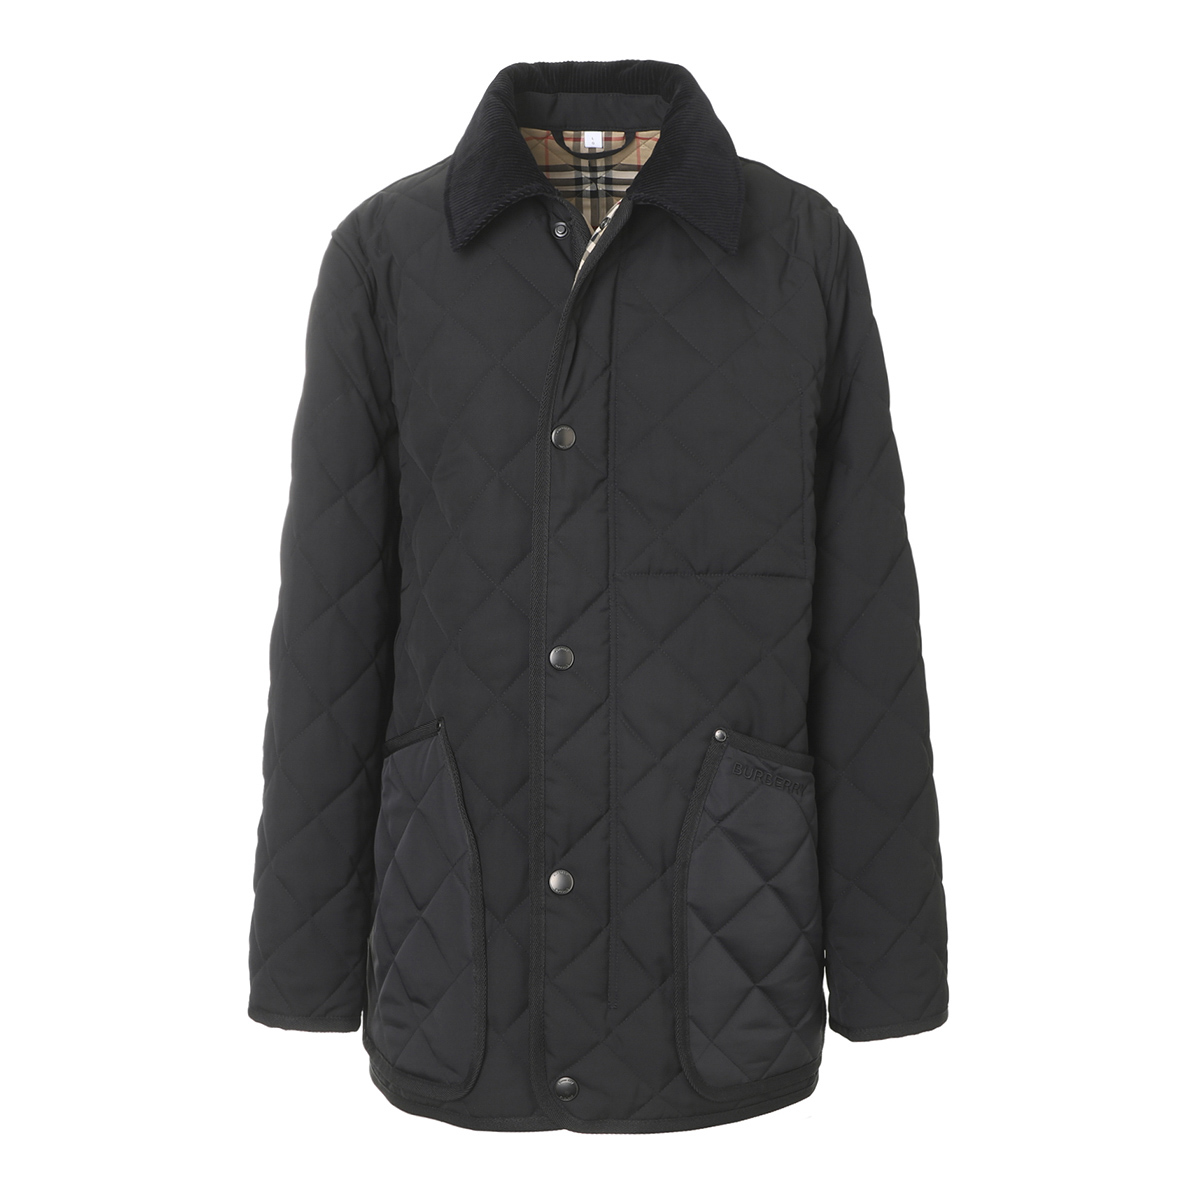  Burberry BURBERRY стеганная куртка LANFORD черный мужской 8049135-black